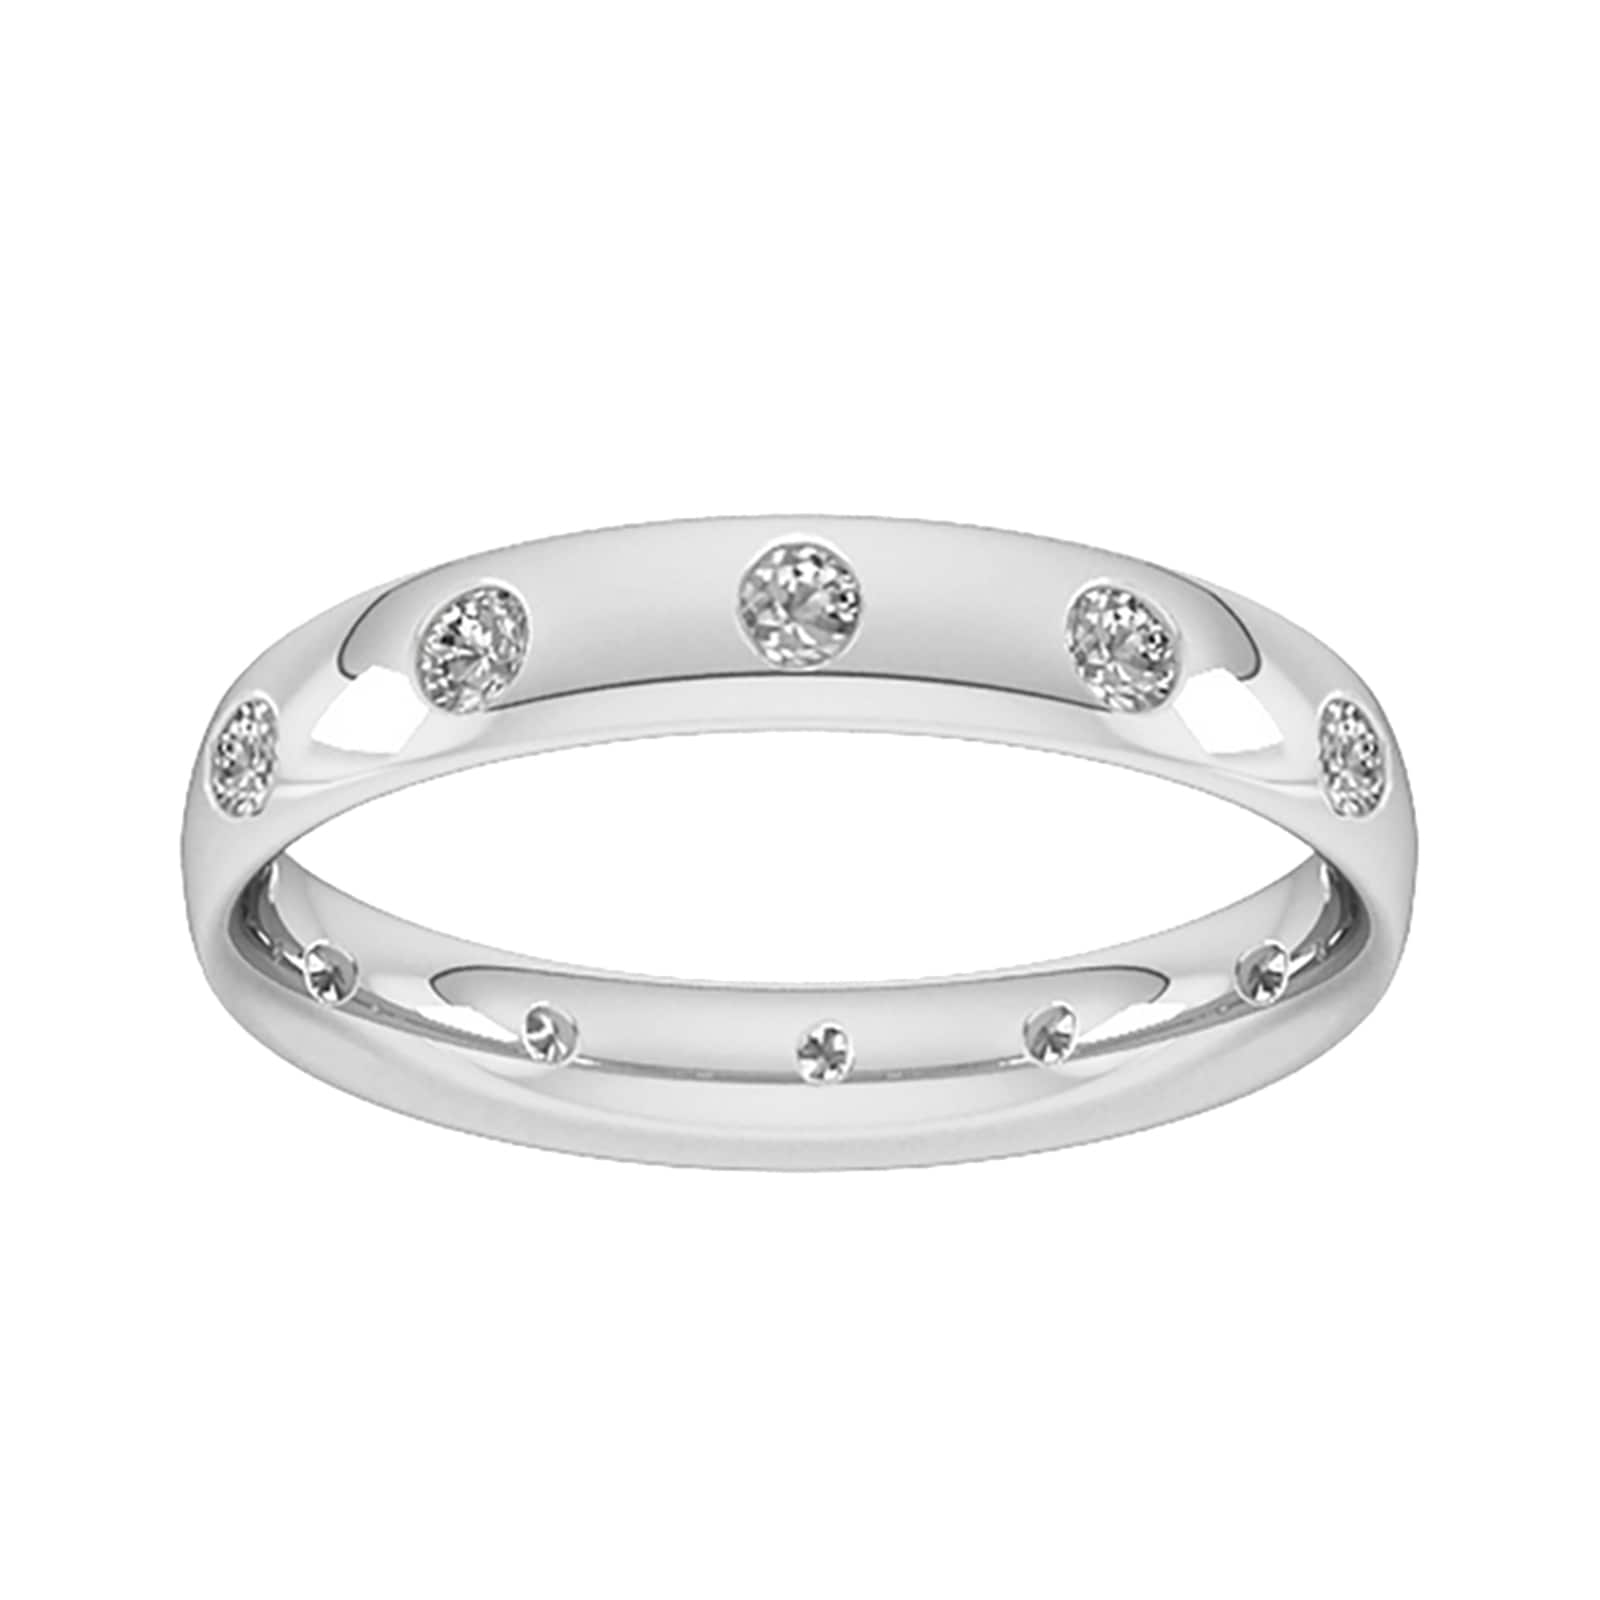 3mm 0.33 Carat Total Weight Twelve Stone Brilliant Cut Rub Over Diamond Set Wedding Ring In 18 Carat White Gold - Ring Size G